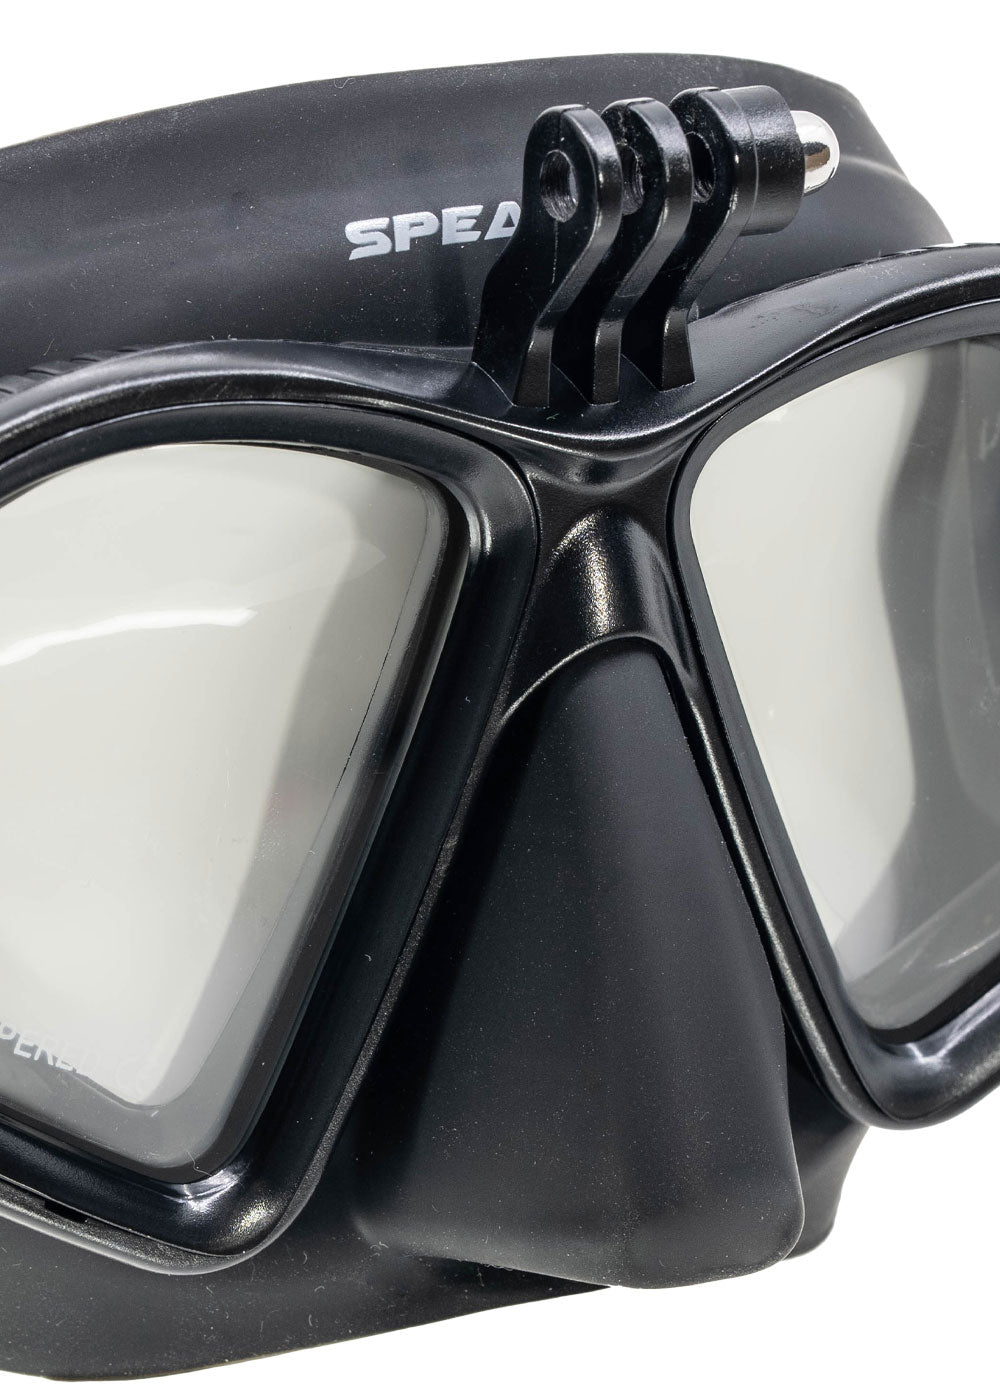 Spearo Taxman Mask - Dual Lens